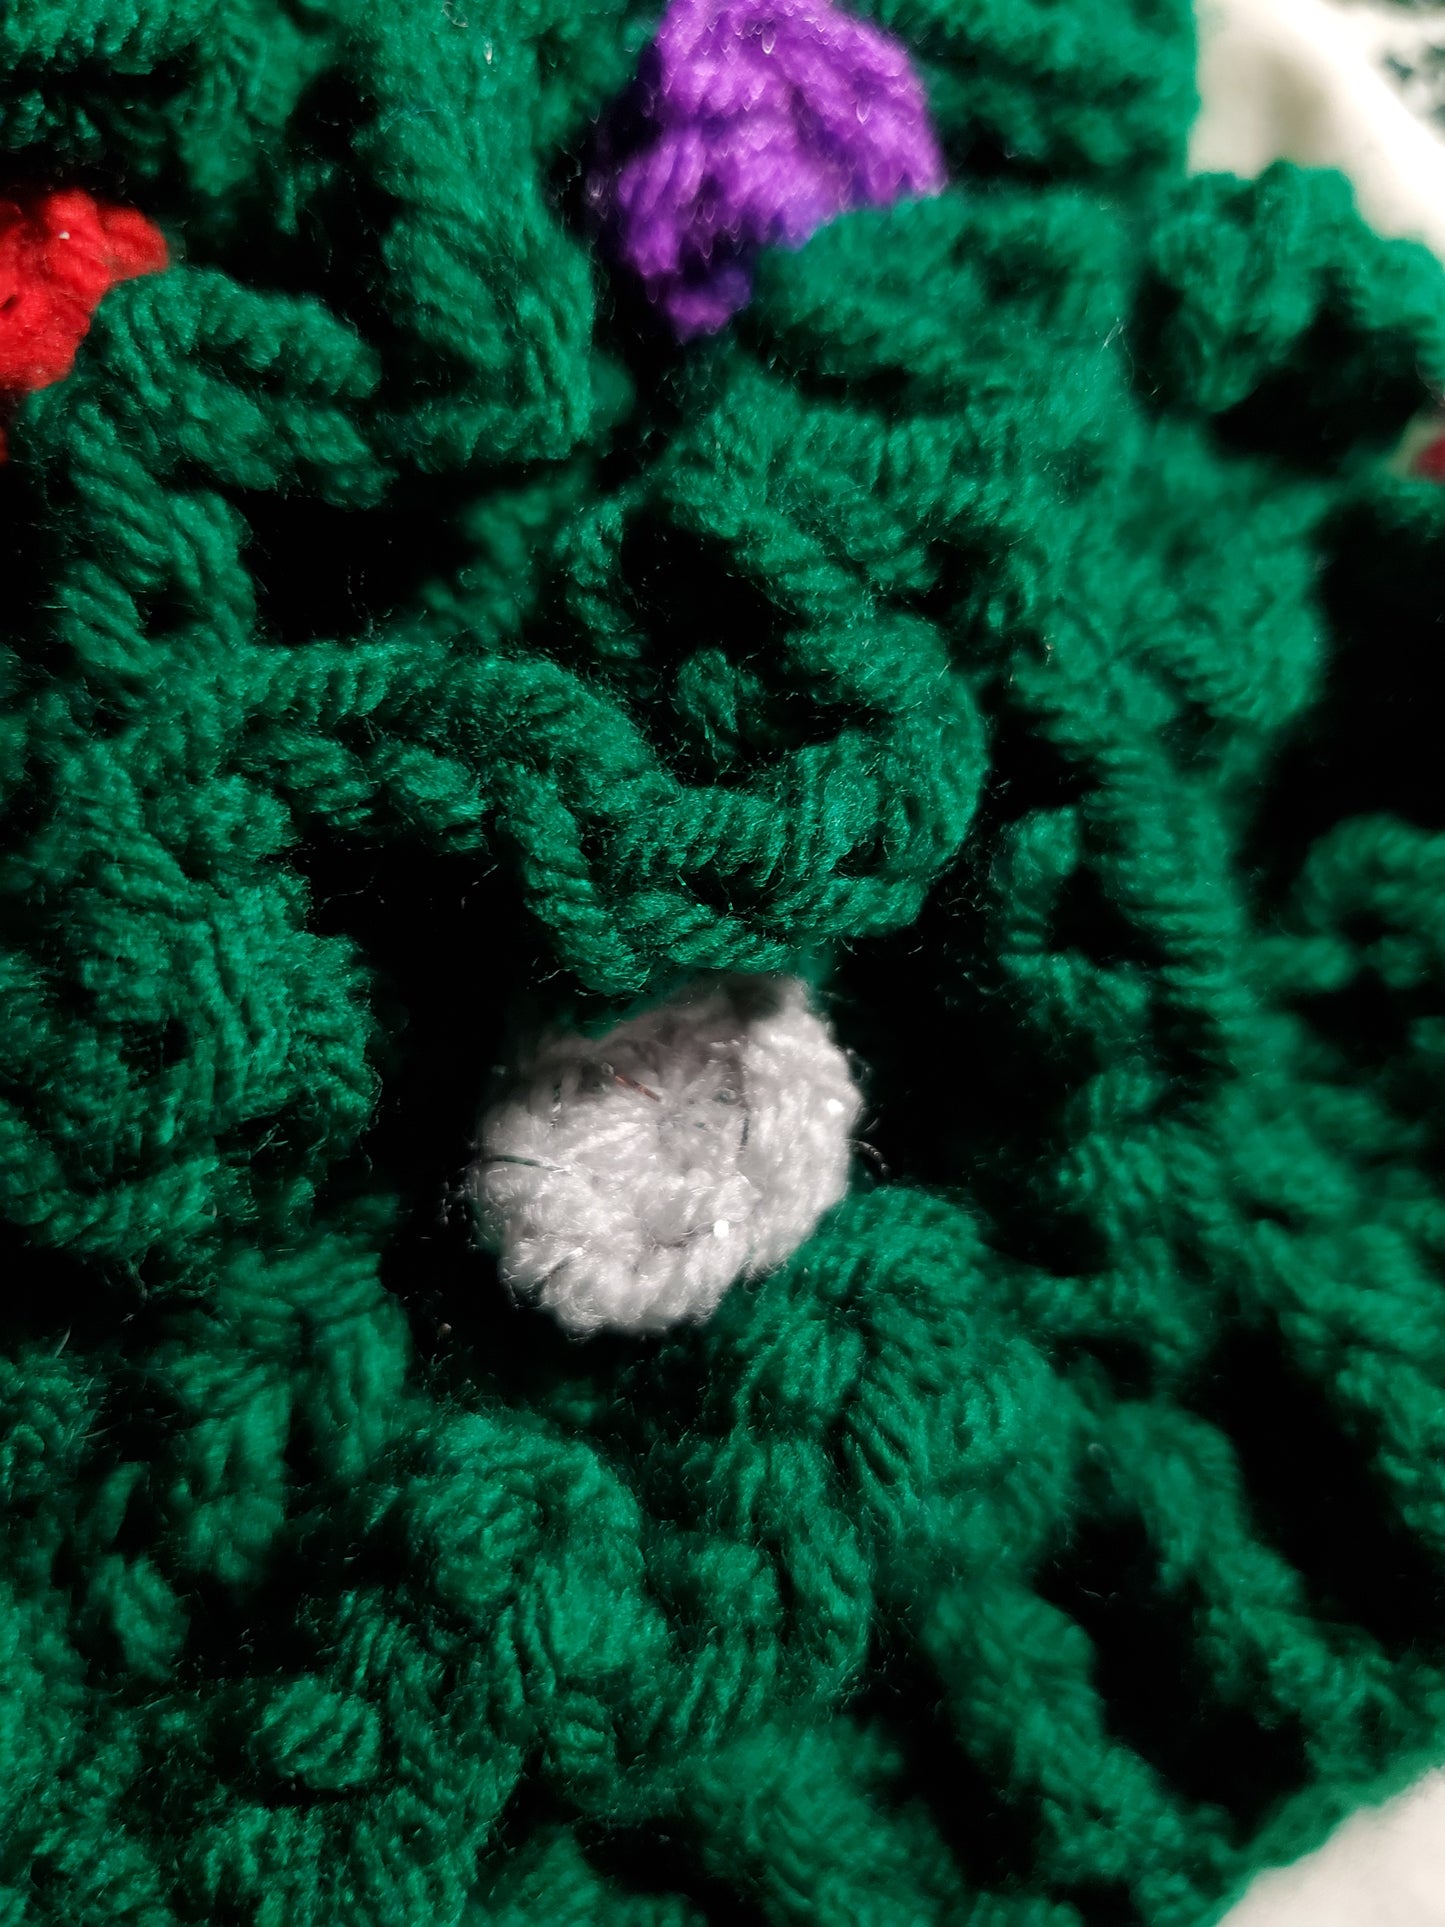 Christmas Tree Hat - crocheted